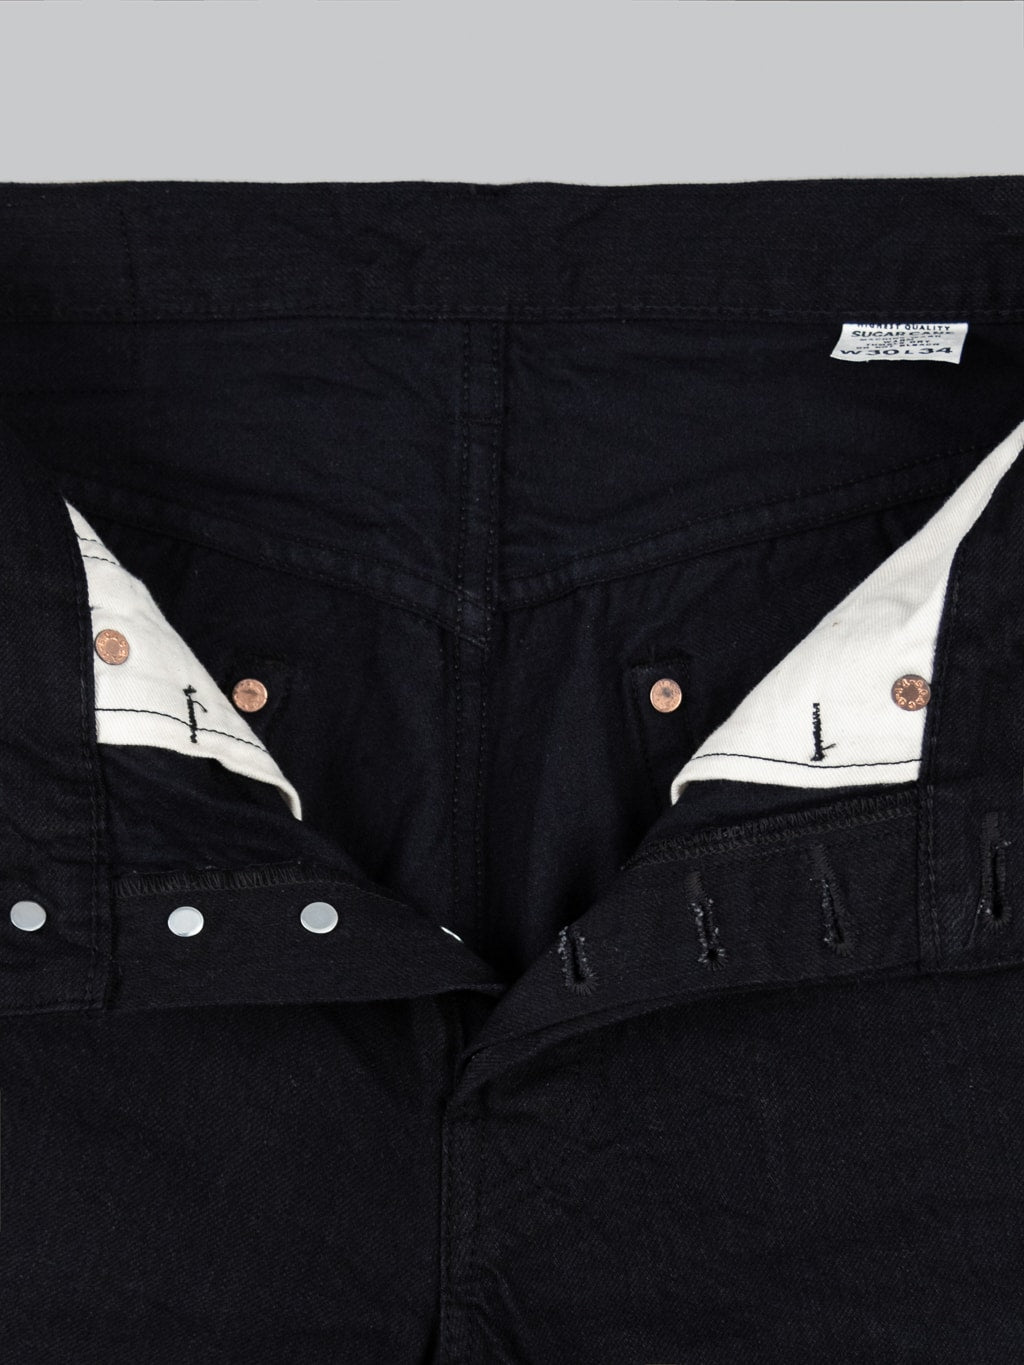 Sugar Cane Type III 13oz Black Denim Slim Jeans cotton fabric